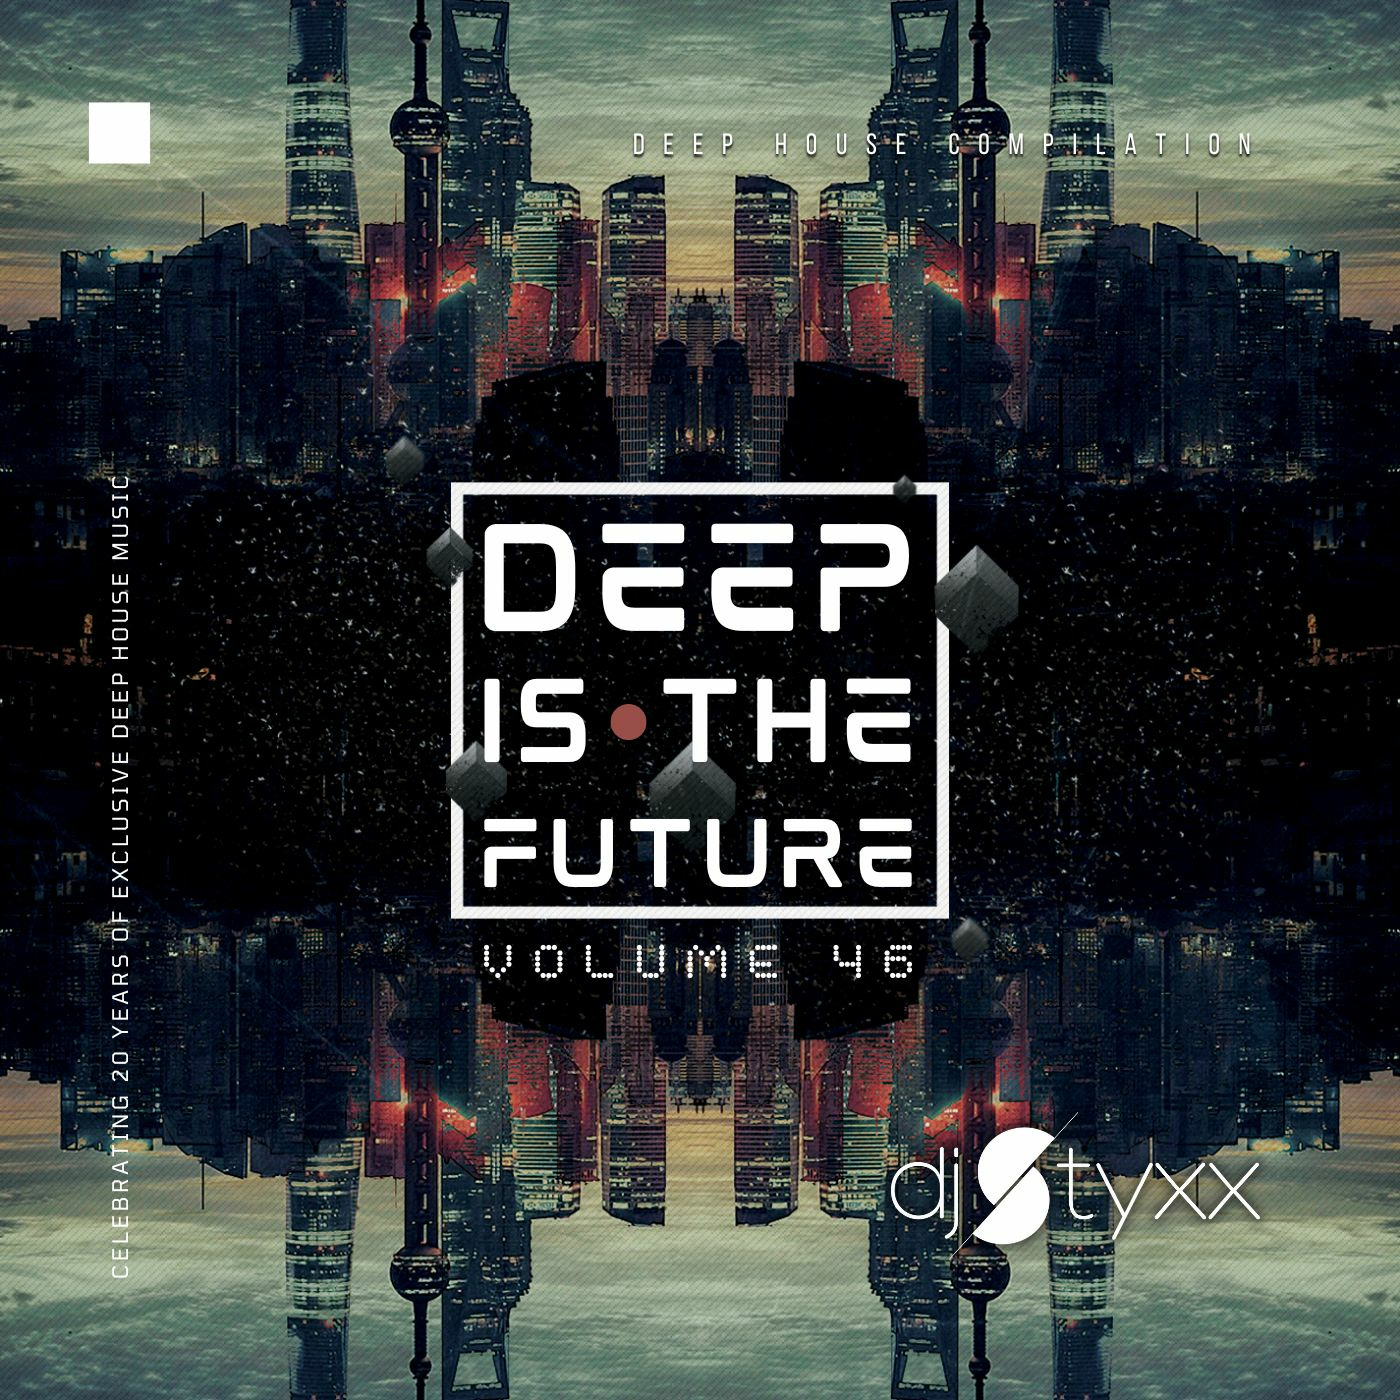 Styxx - Deep is the Future (Vol.46)